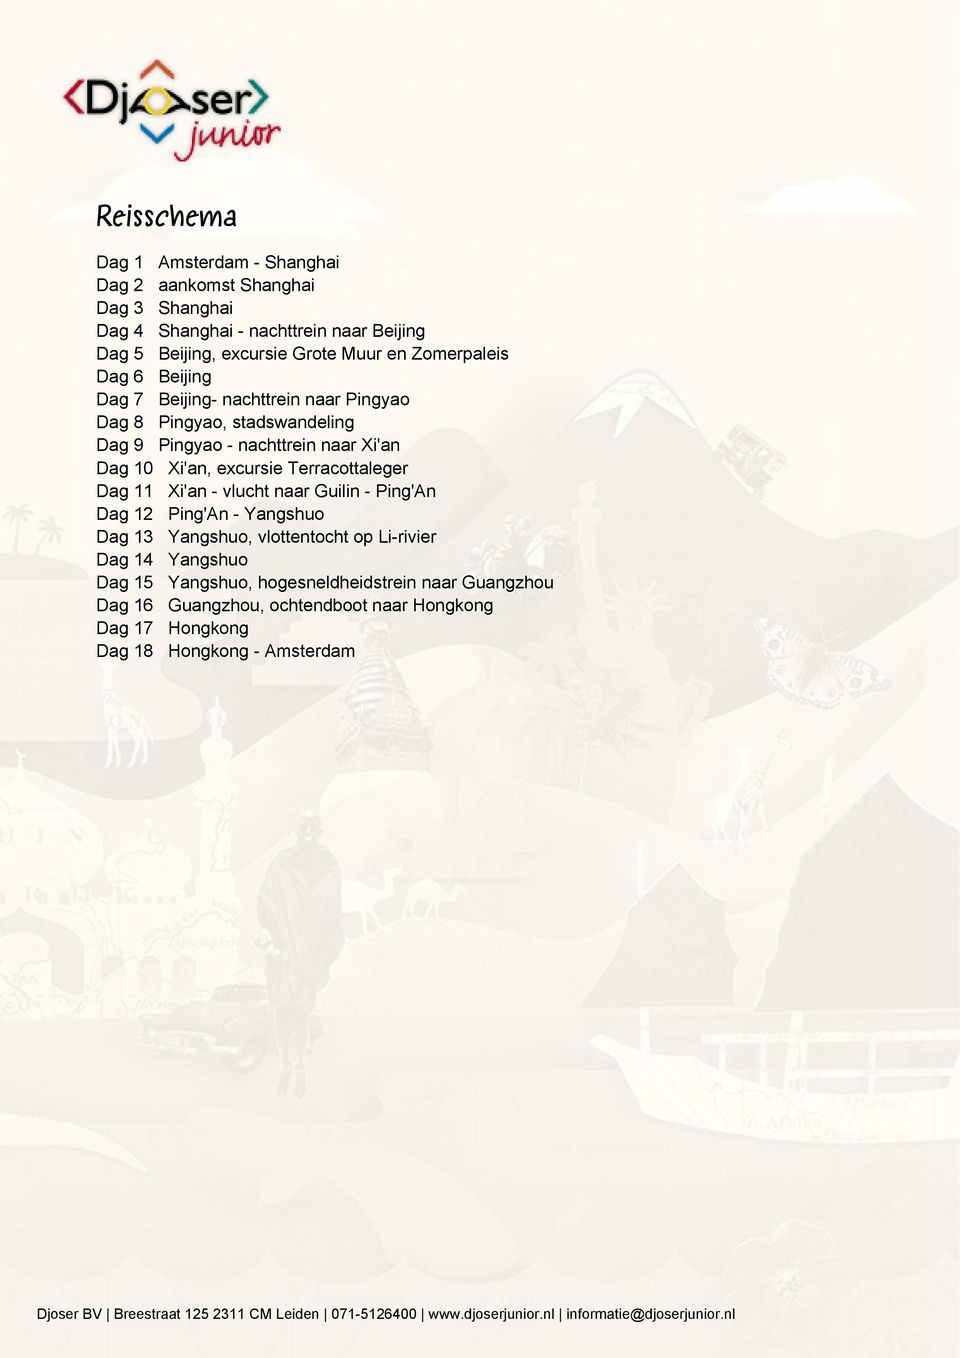 Xi'an, excursie Terracottaleger Dag 11 Xi'an - vlucht naar Guilin - Ping'An Dag 12 Ping'An - Yangshuo Dag 13 Yangshuo, vlottentocht op Li-rivier Dag